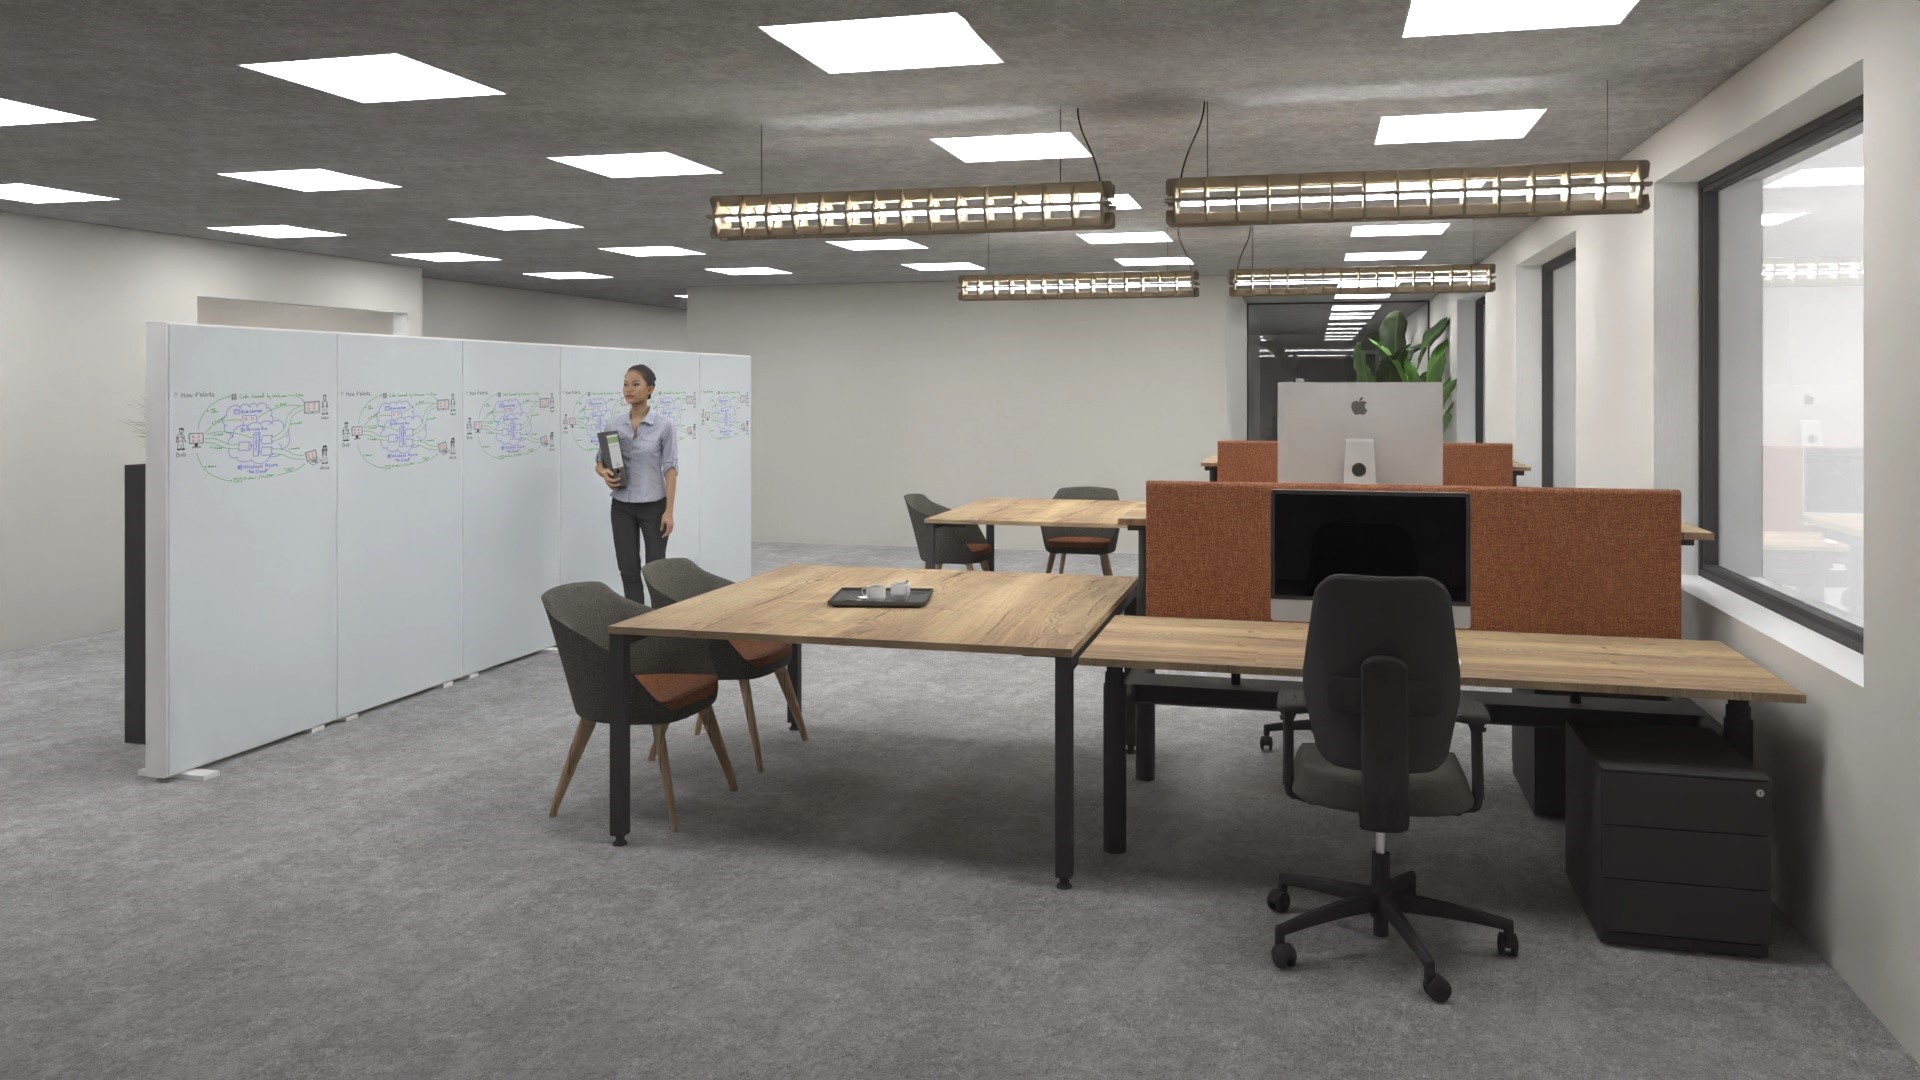 3D tekening van kantoorruimte met Writable wall, Akoestische wand met whiteboard